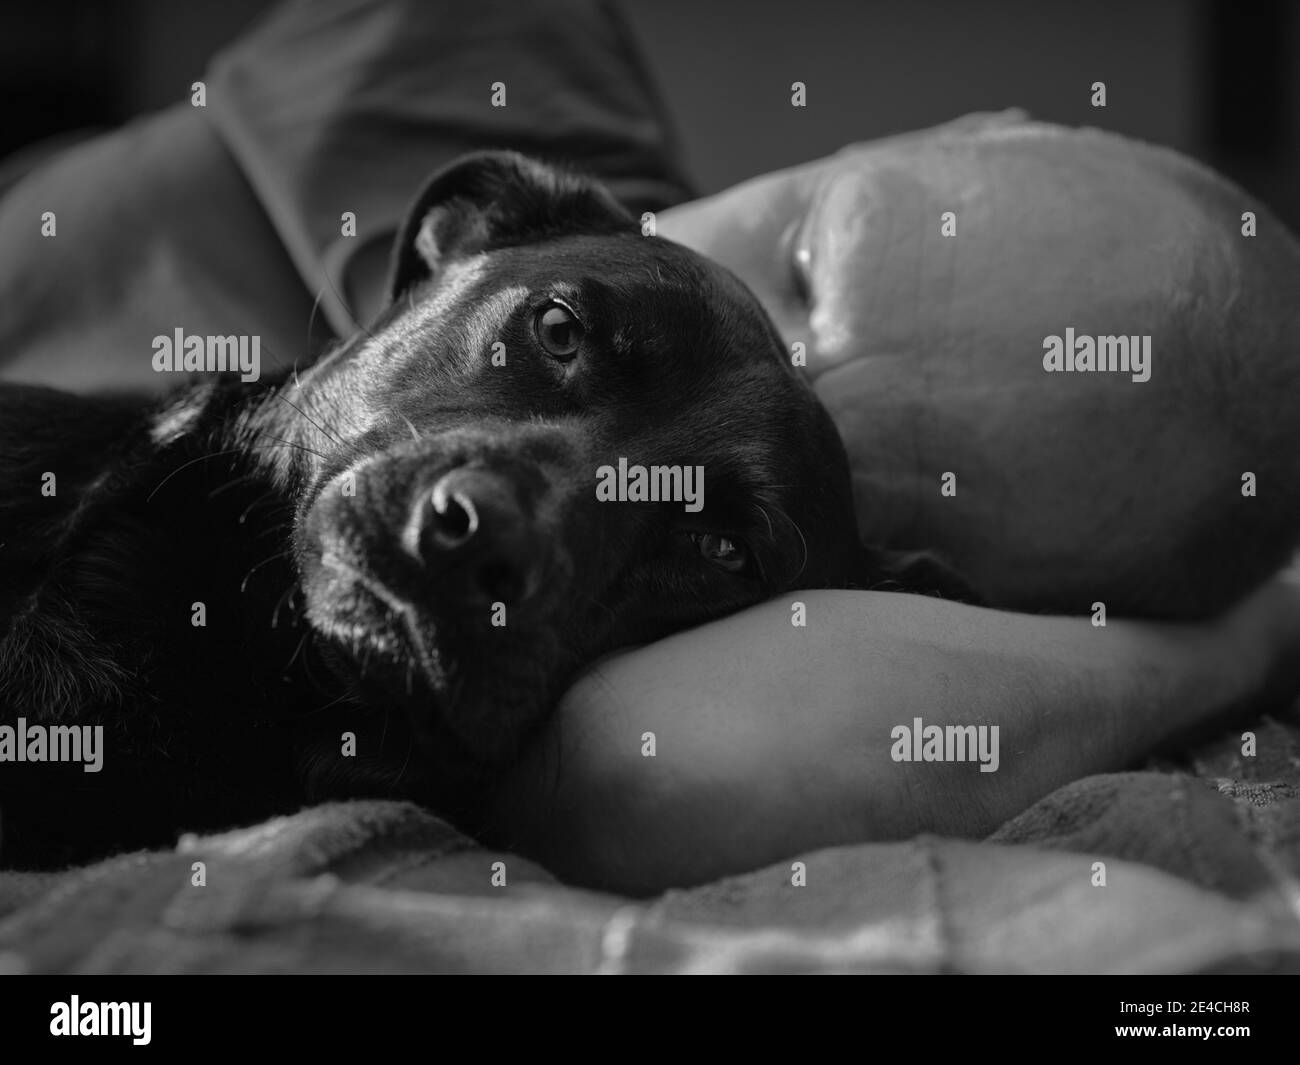 A dog, Labrador mix, taking a nap with master. Stock Photo